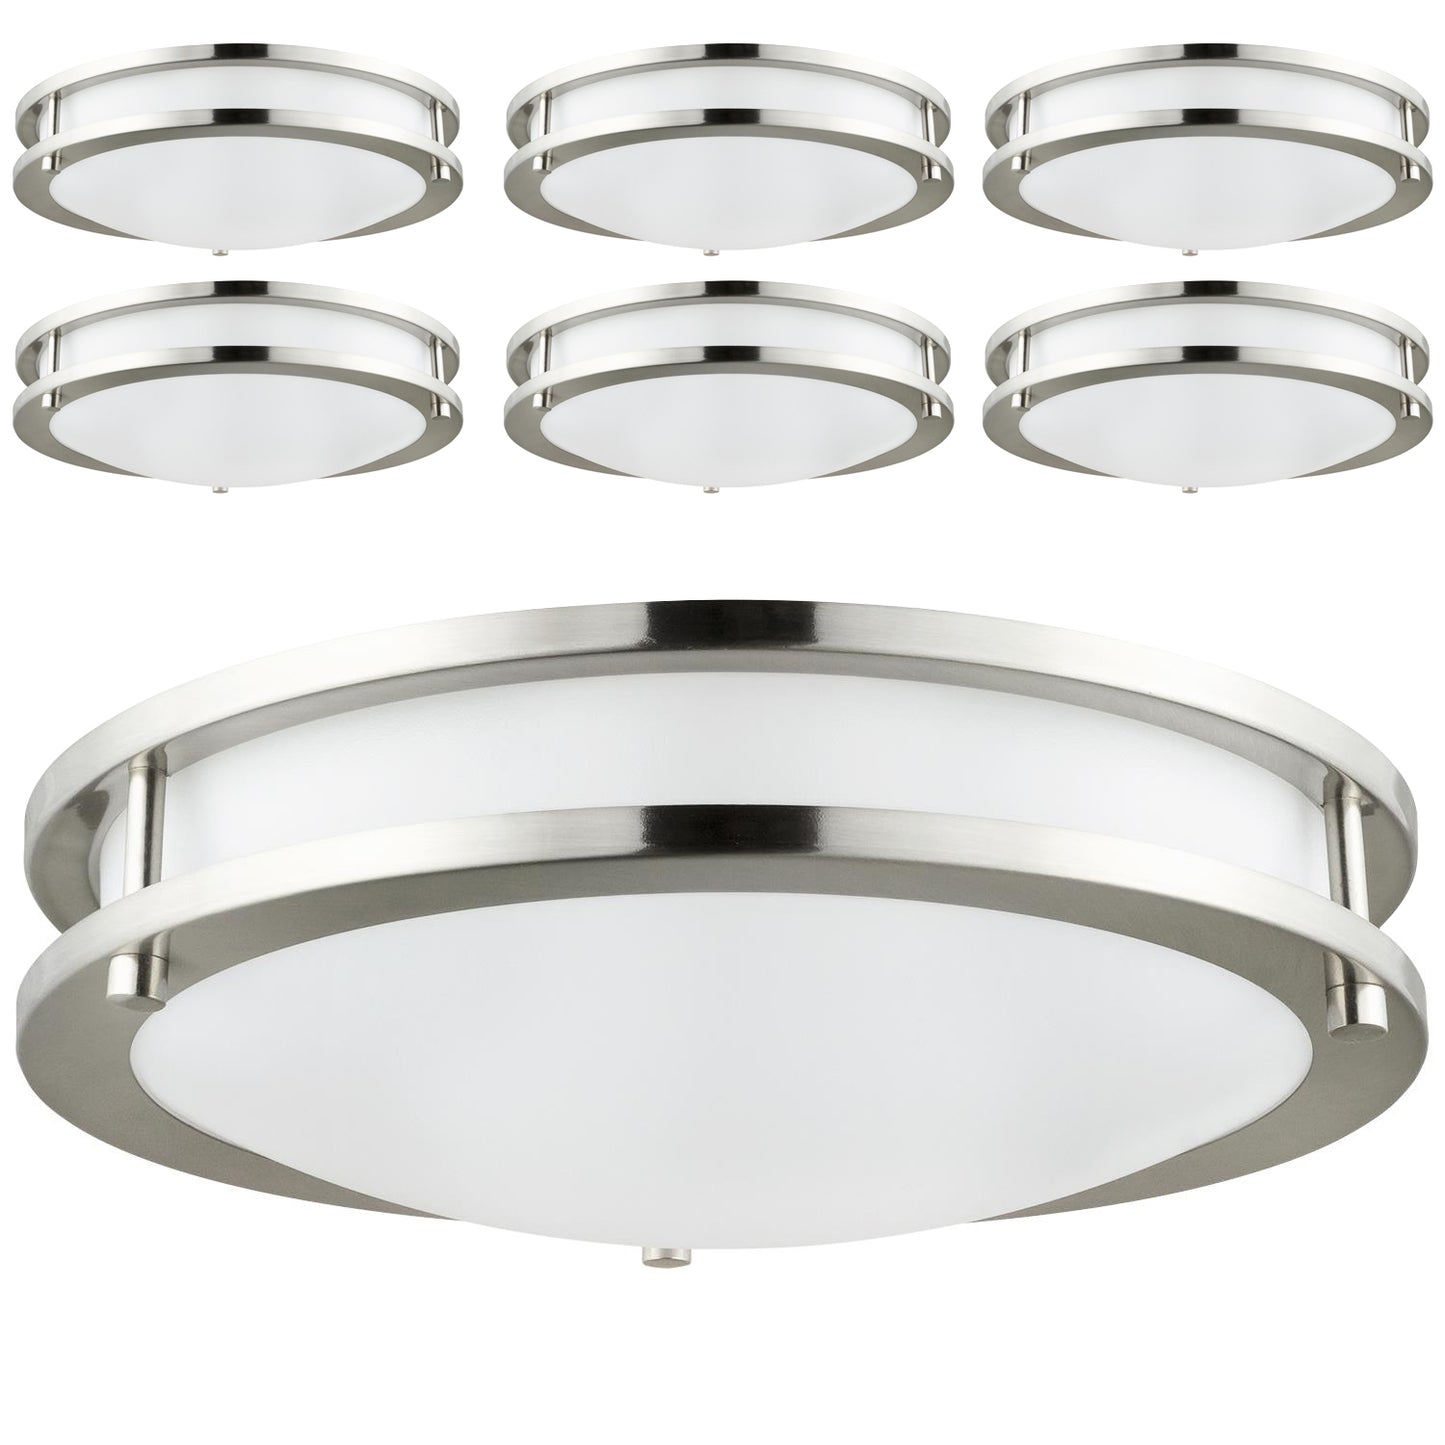 Sunlite LFX/DCO16/BN/24W/E/D/30K LED 24W 16" Decorative Brushed Nickel Ceiling Light Fixtures, 3000K Warm White